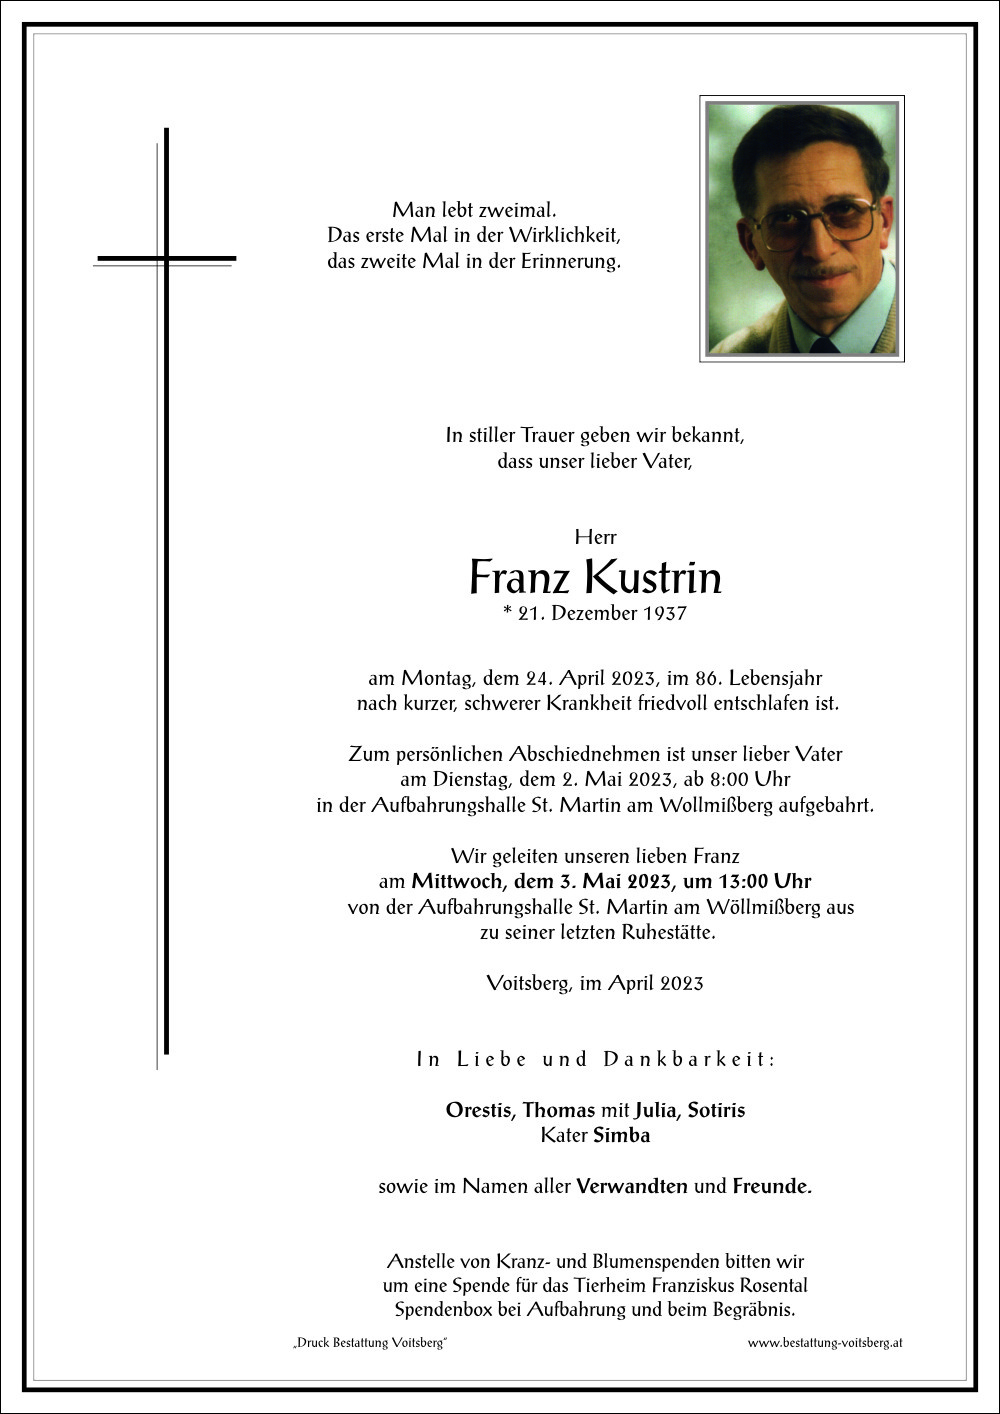 Franz Kustrin